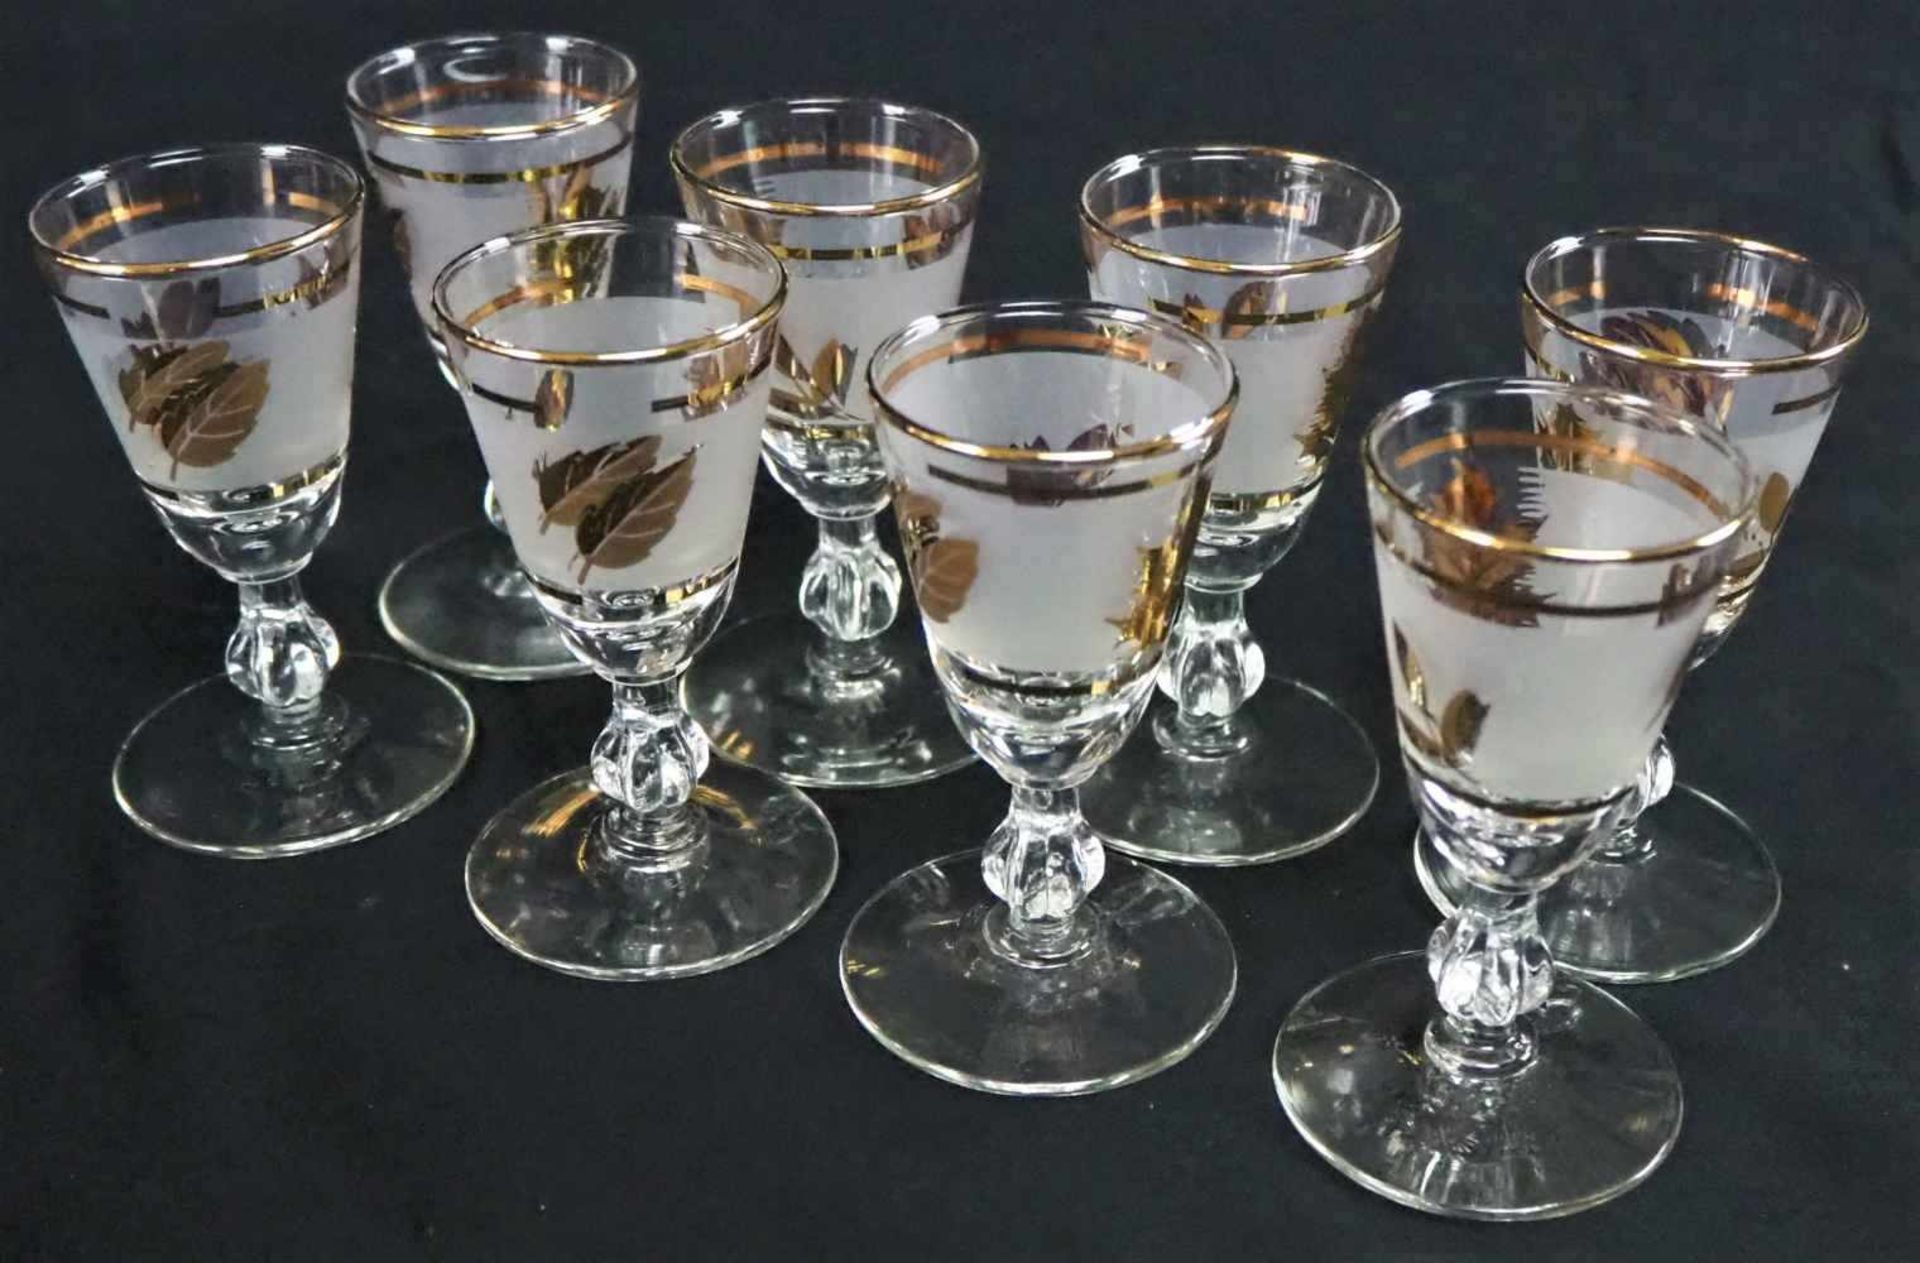 8 Likörgläser mit Golddekor8 liqueur glasses with gold decoration- - -21.01 % buyer's premium on the